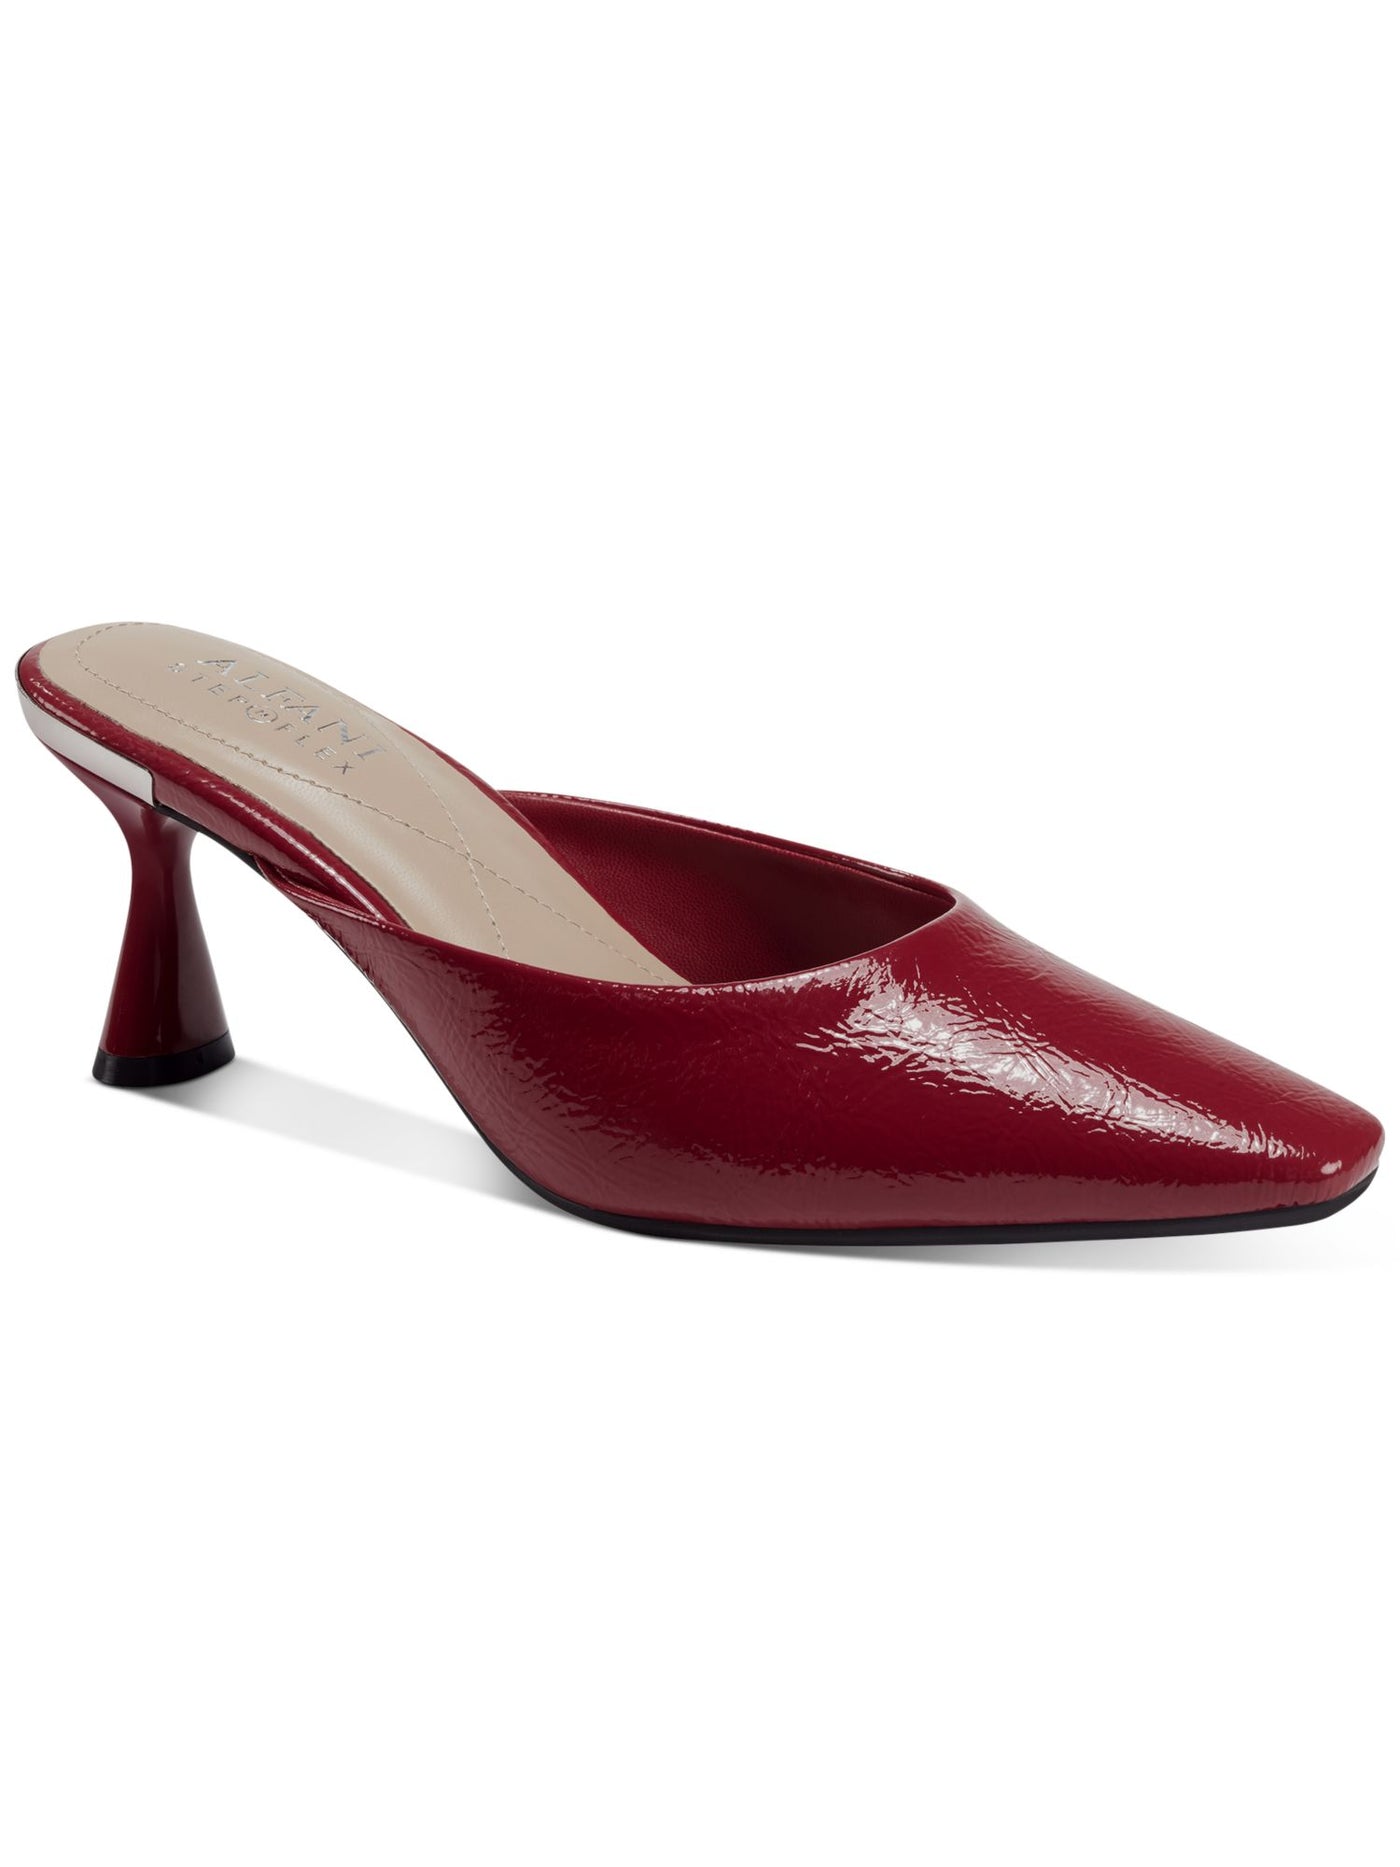 ALFANI Womens Red Crinkle Comfort Cecilia Square Toe Flare Slip On Heeled Mules Shoes 7.5 M